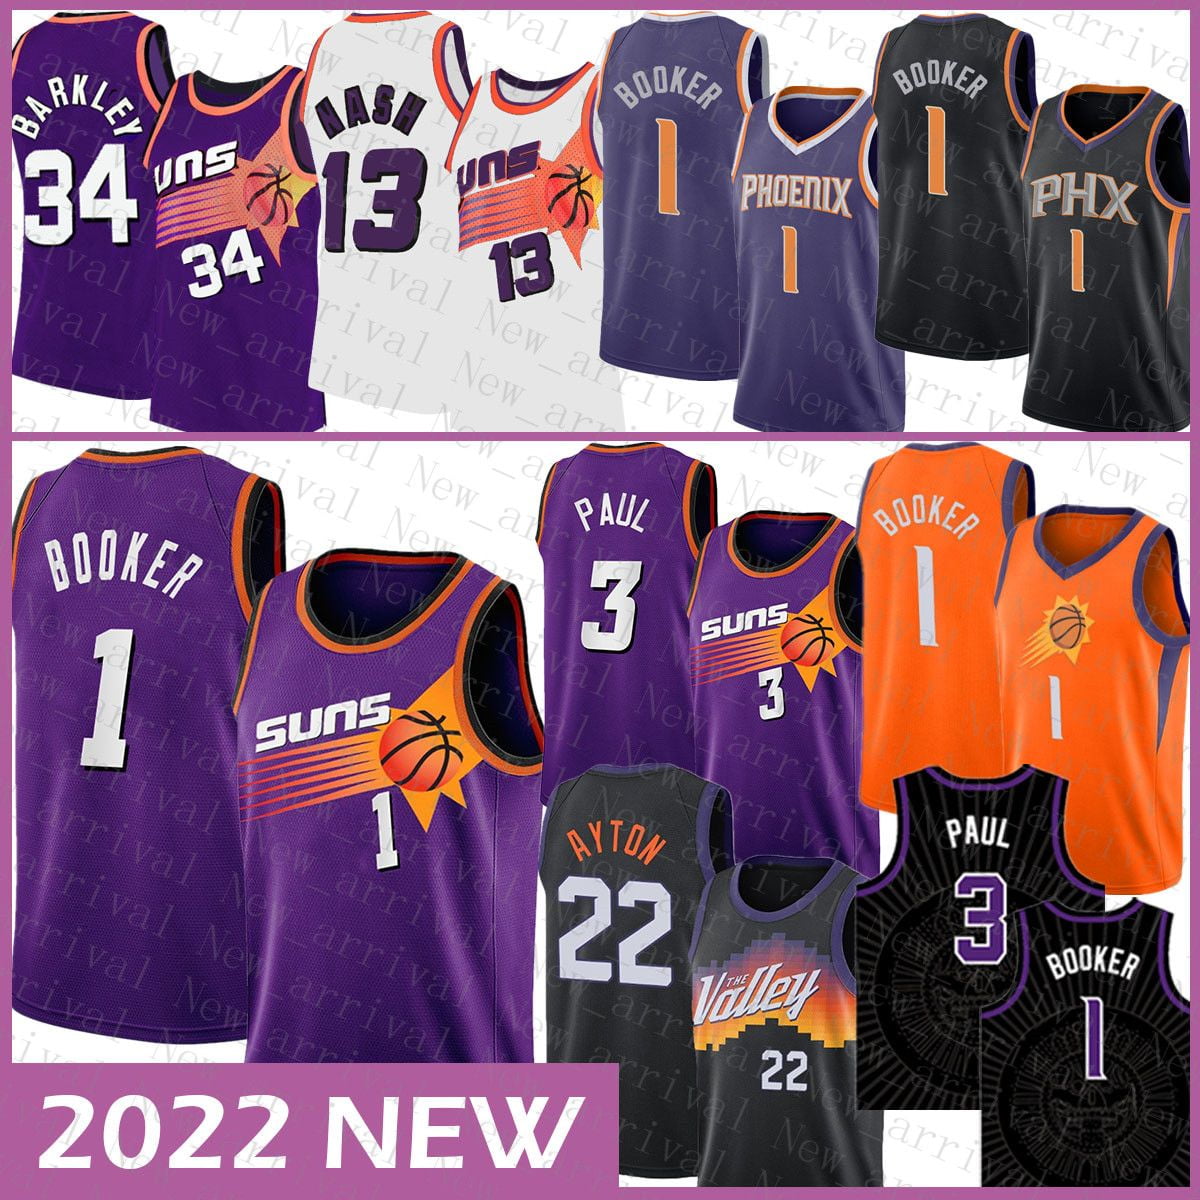 NBA_ 2022 Basketball Jersey 1 3 22 13 34 Phoenixs Sun Devin Booker